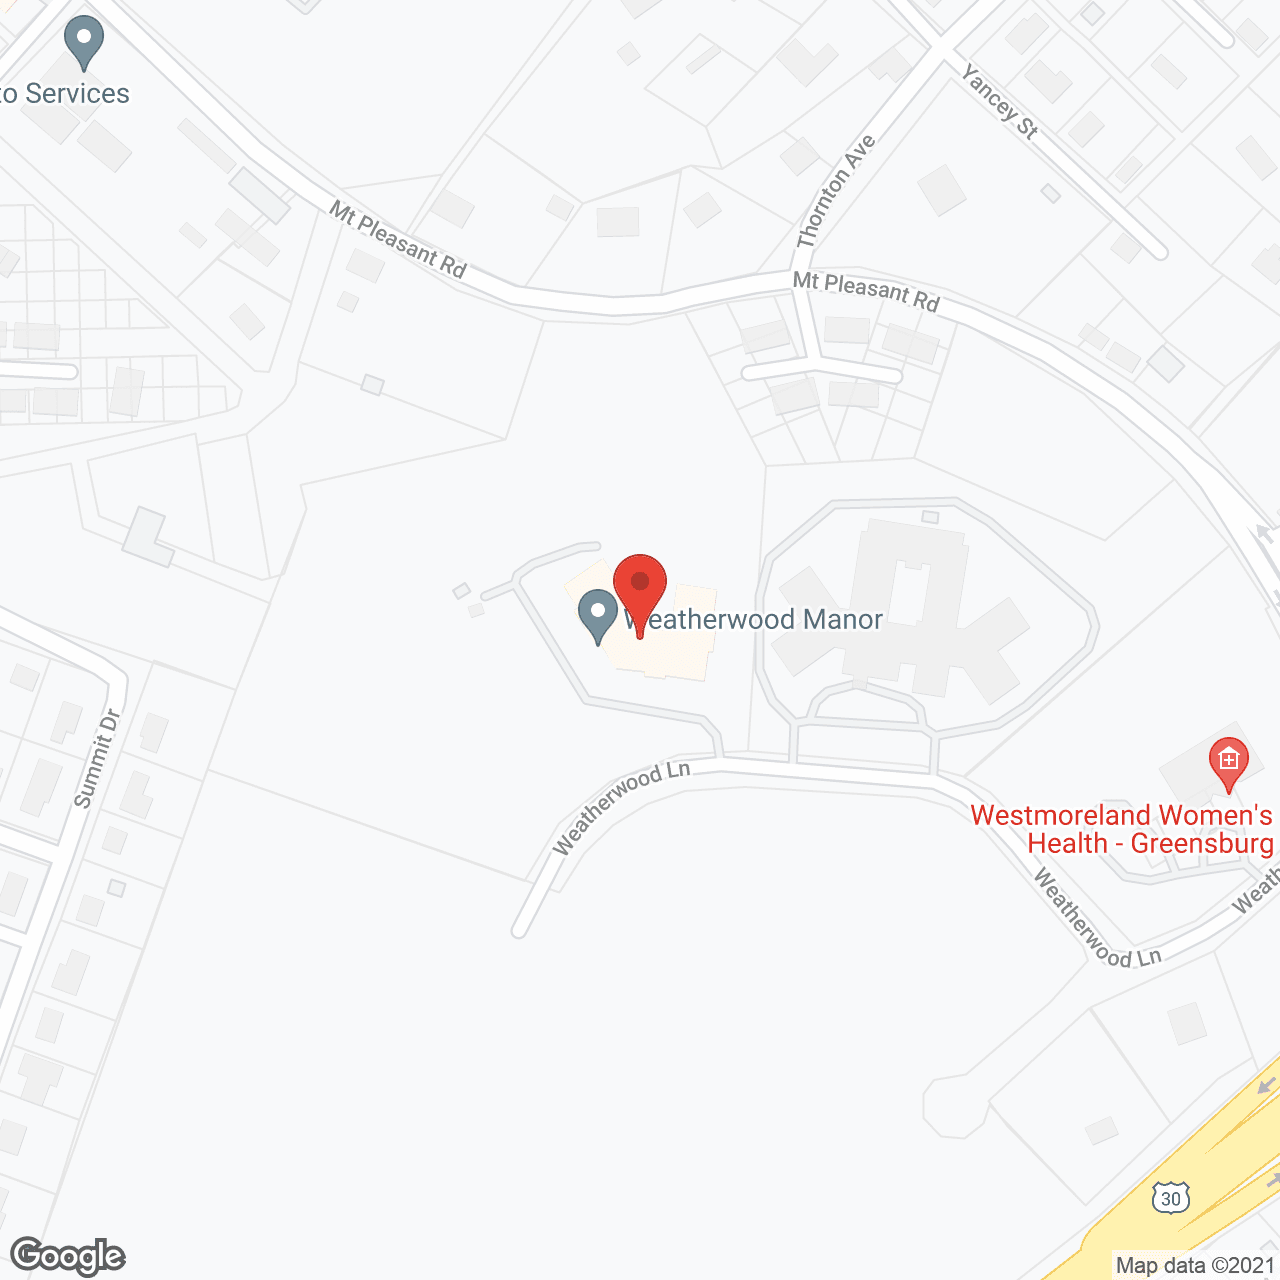 Weatherwood Manor in google map